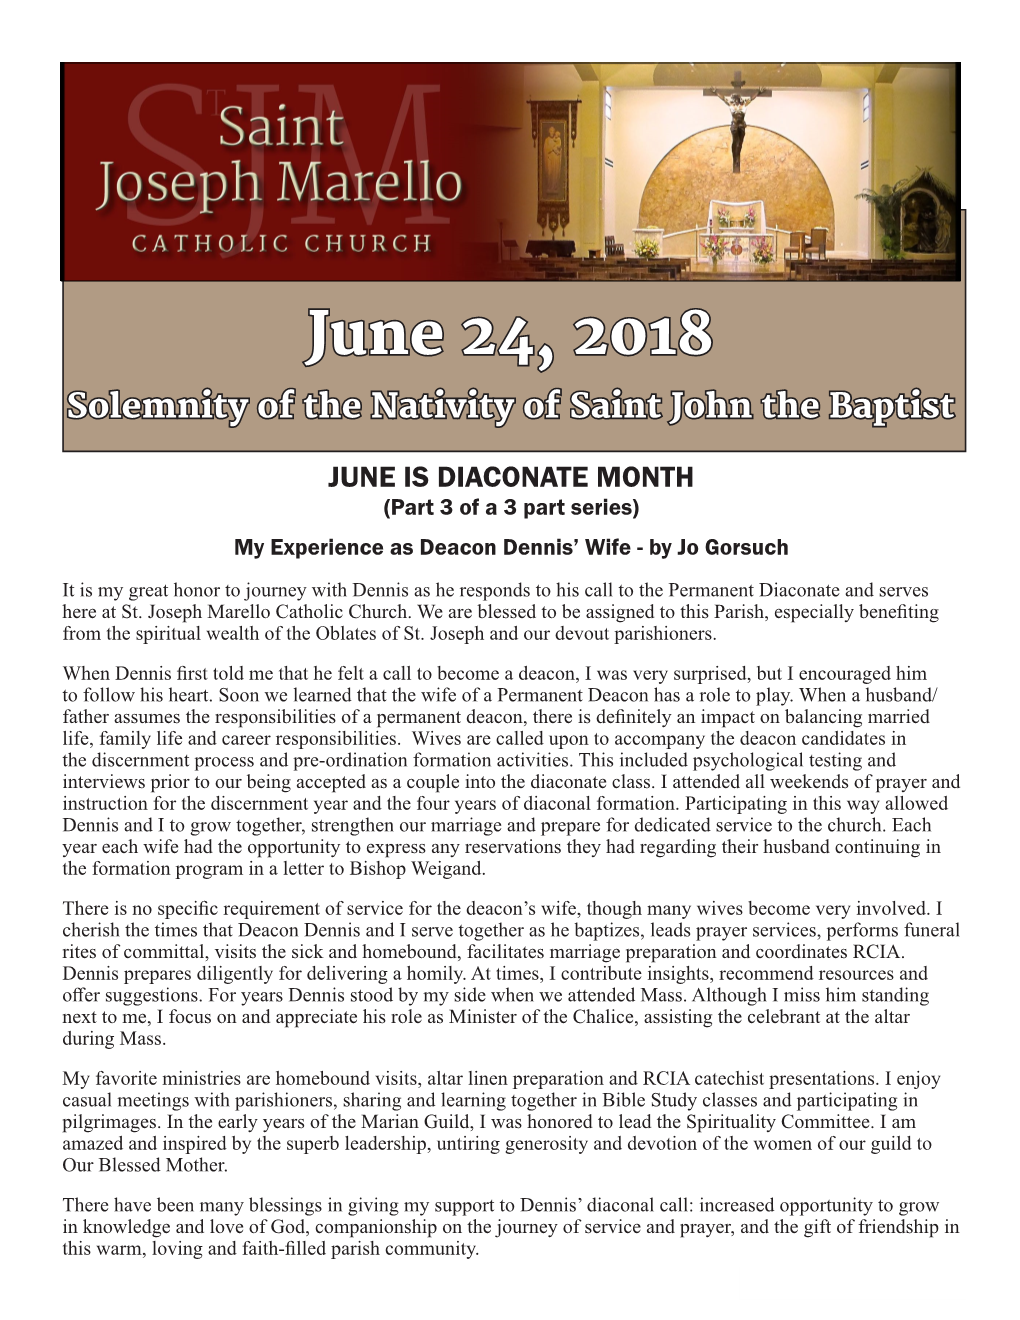 June 24, 2018 Solemnity of the Nativity of Saint John the Baptist